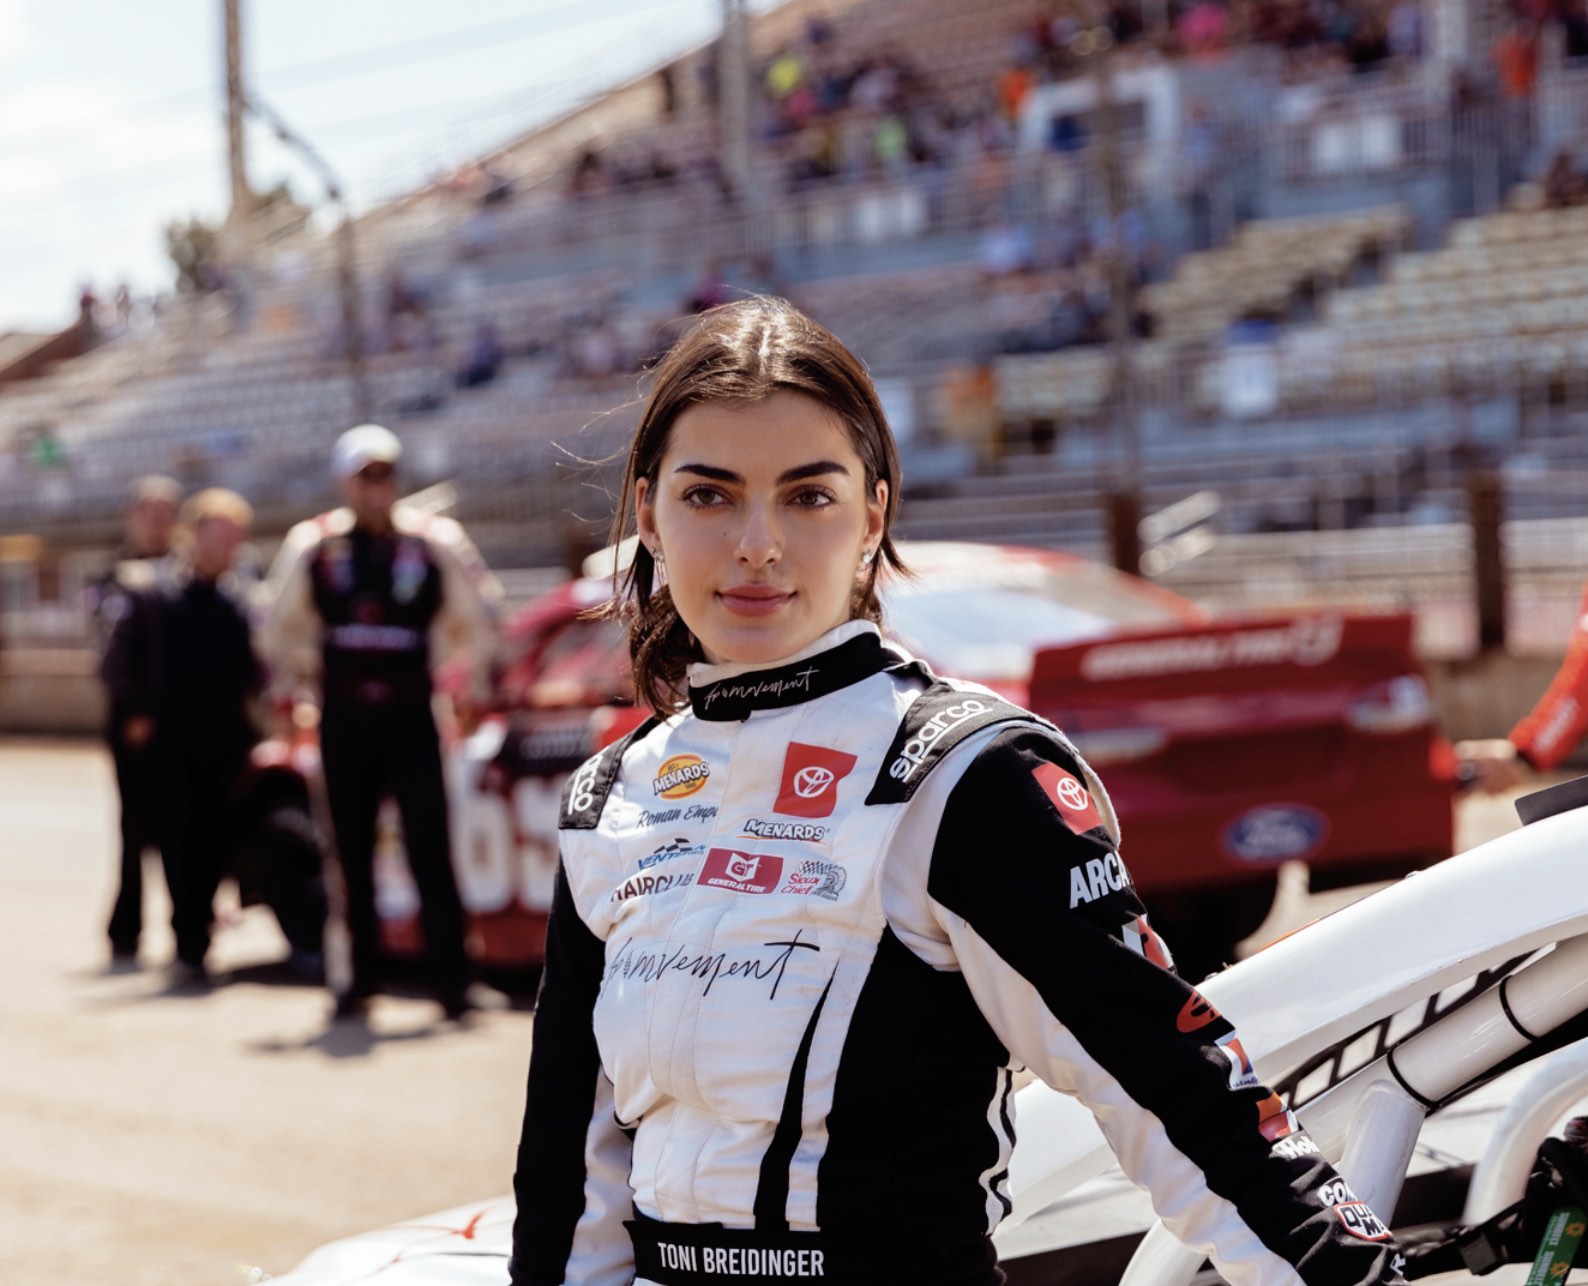 Toni Breidinger makes history as Nascar's first Arab-American female driver